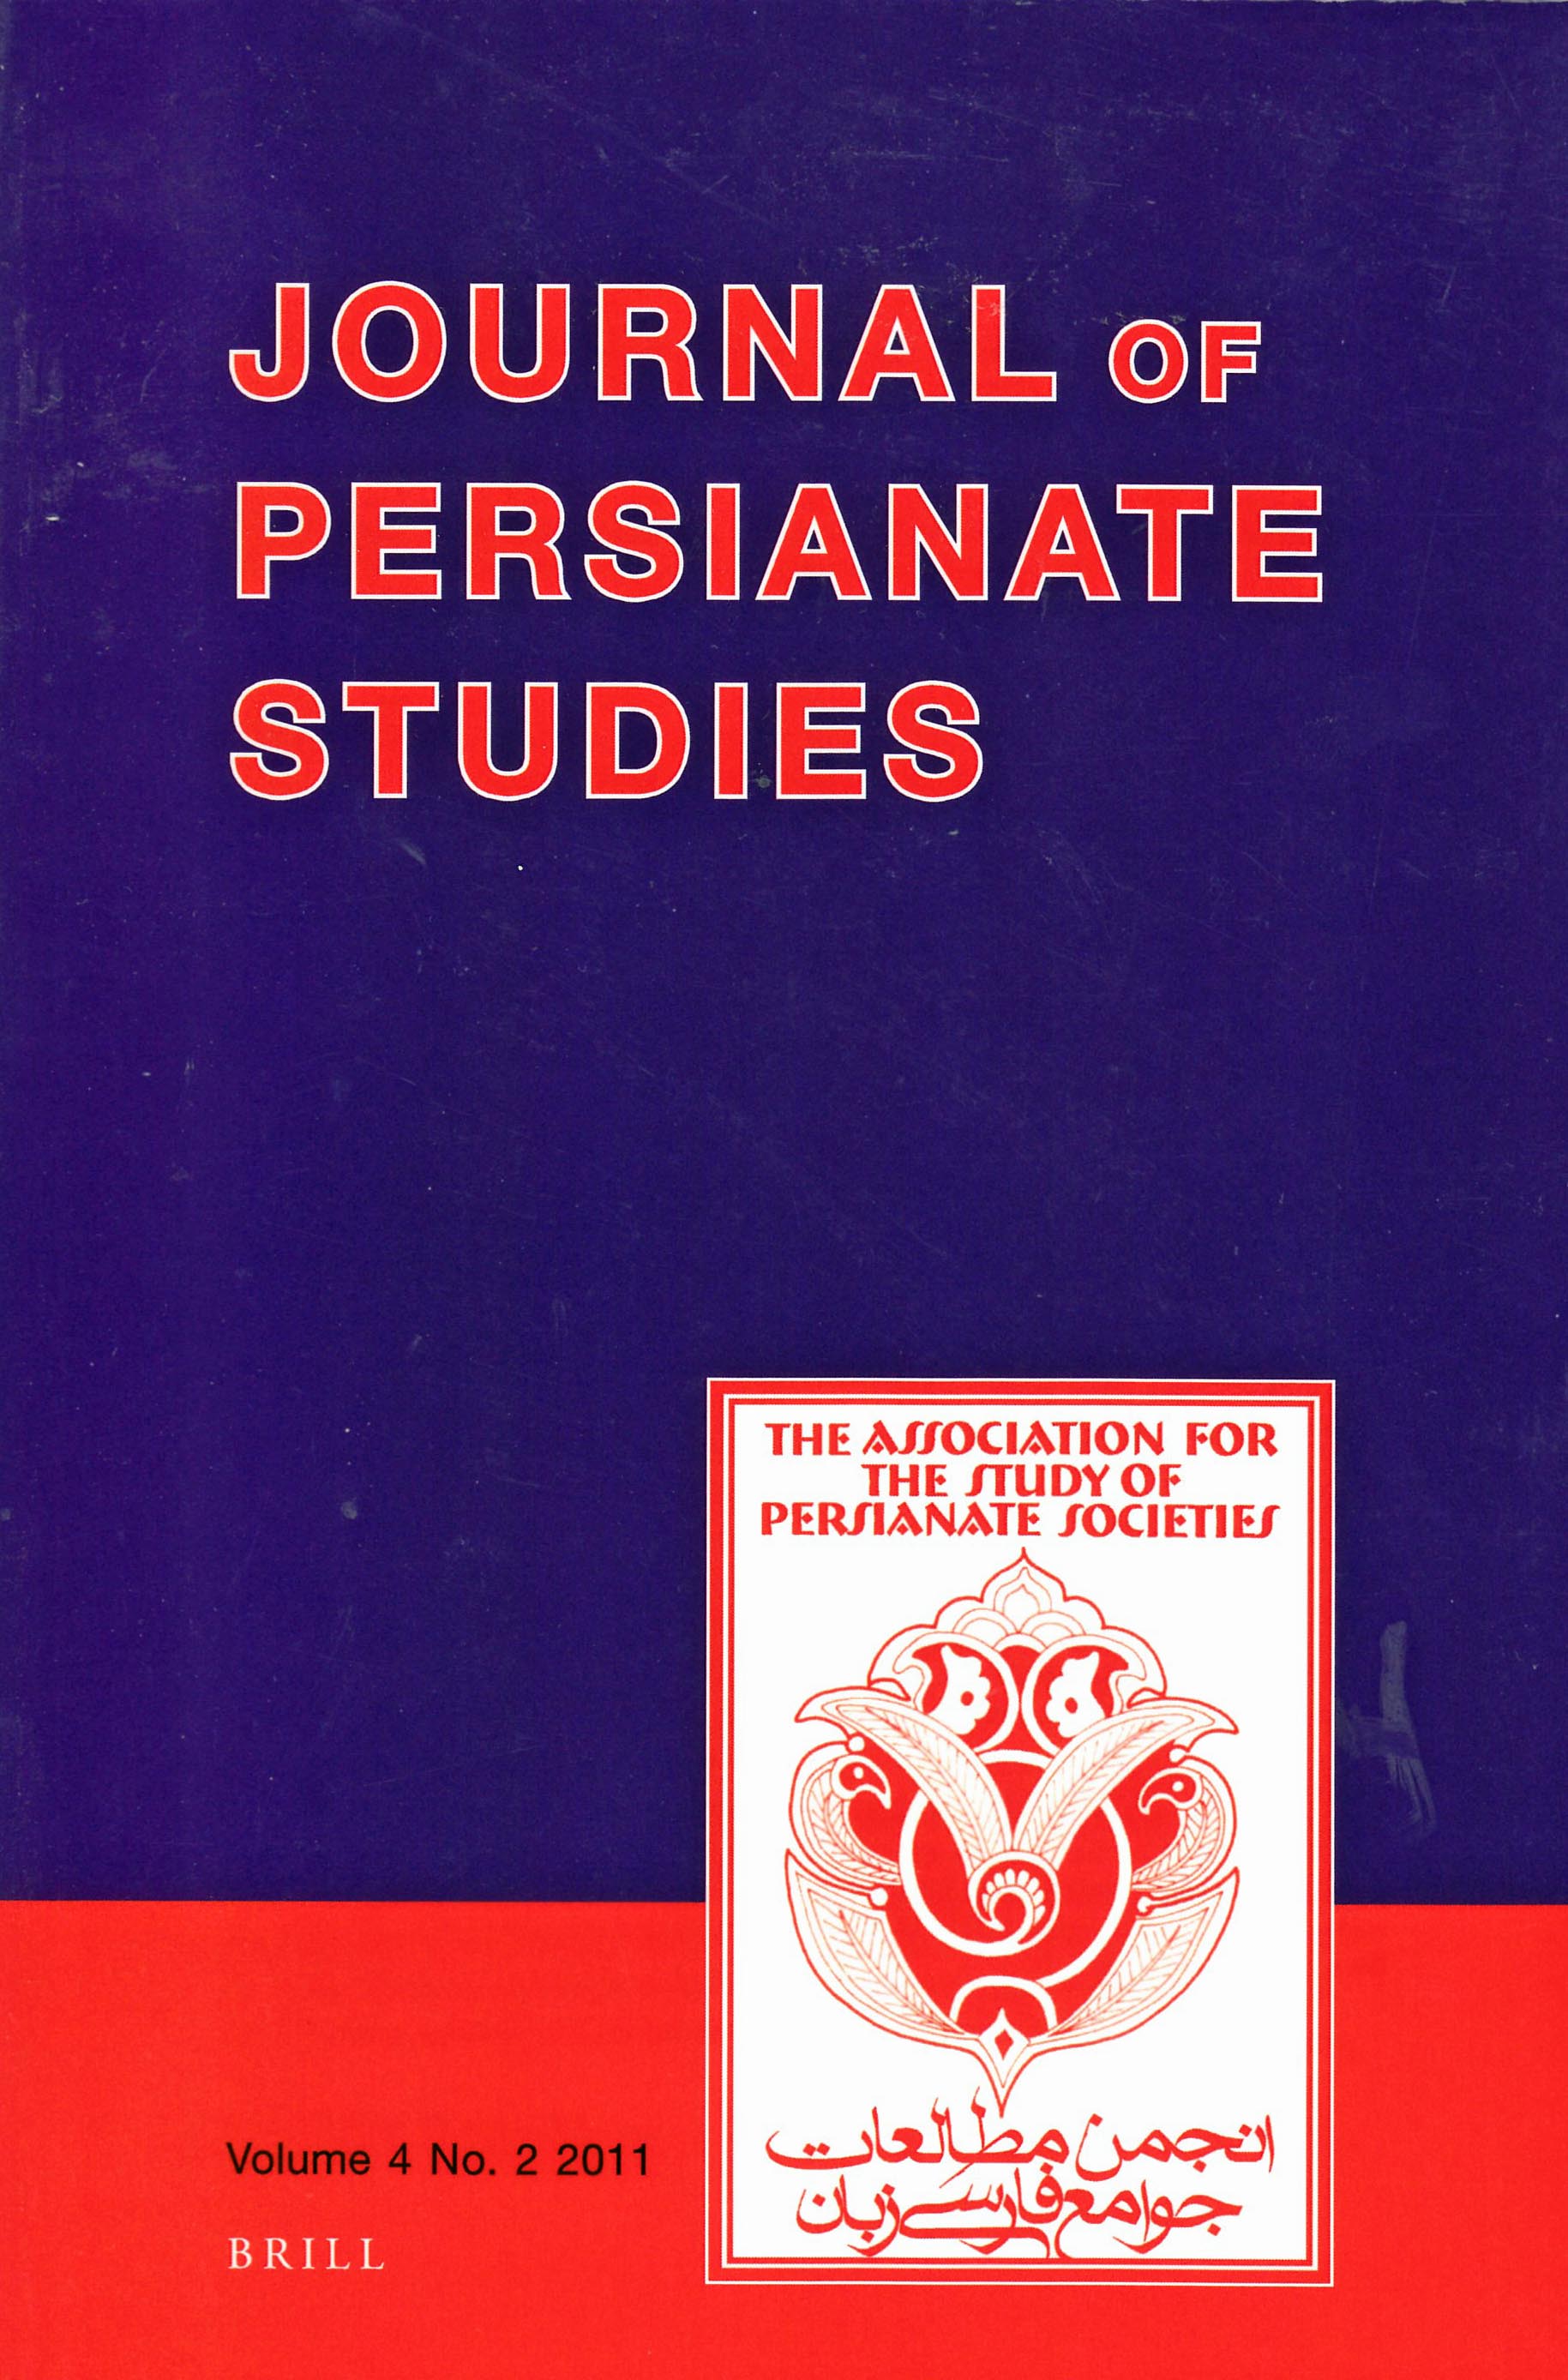 Journal of Persianate Studies, Volume 4, No. 2